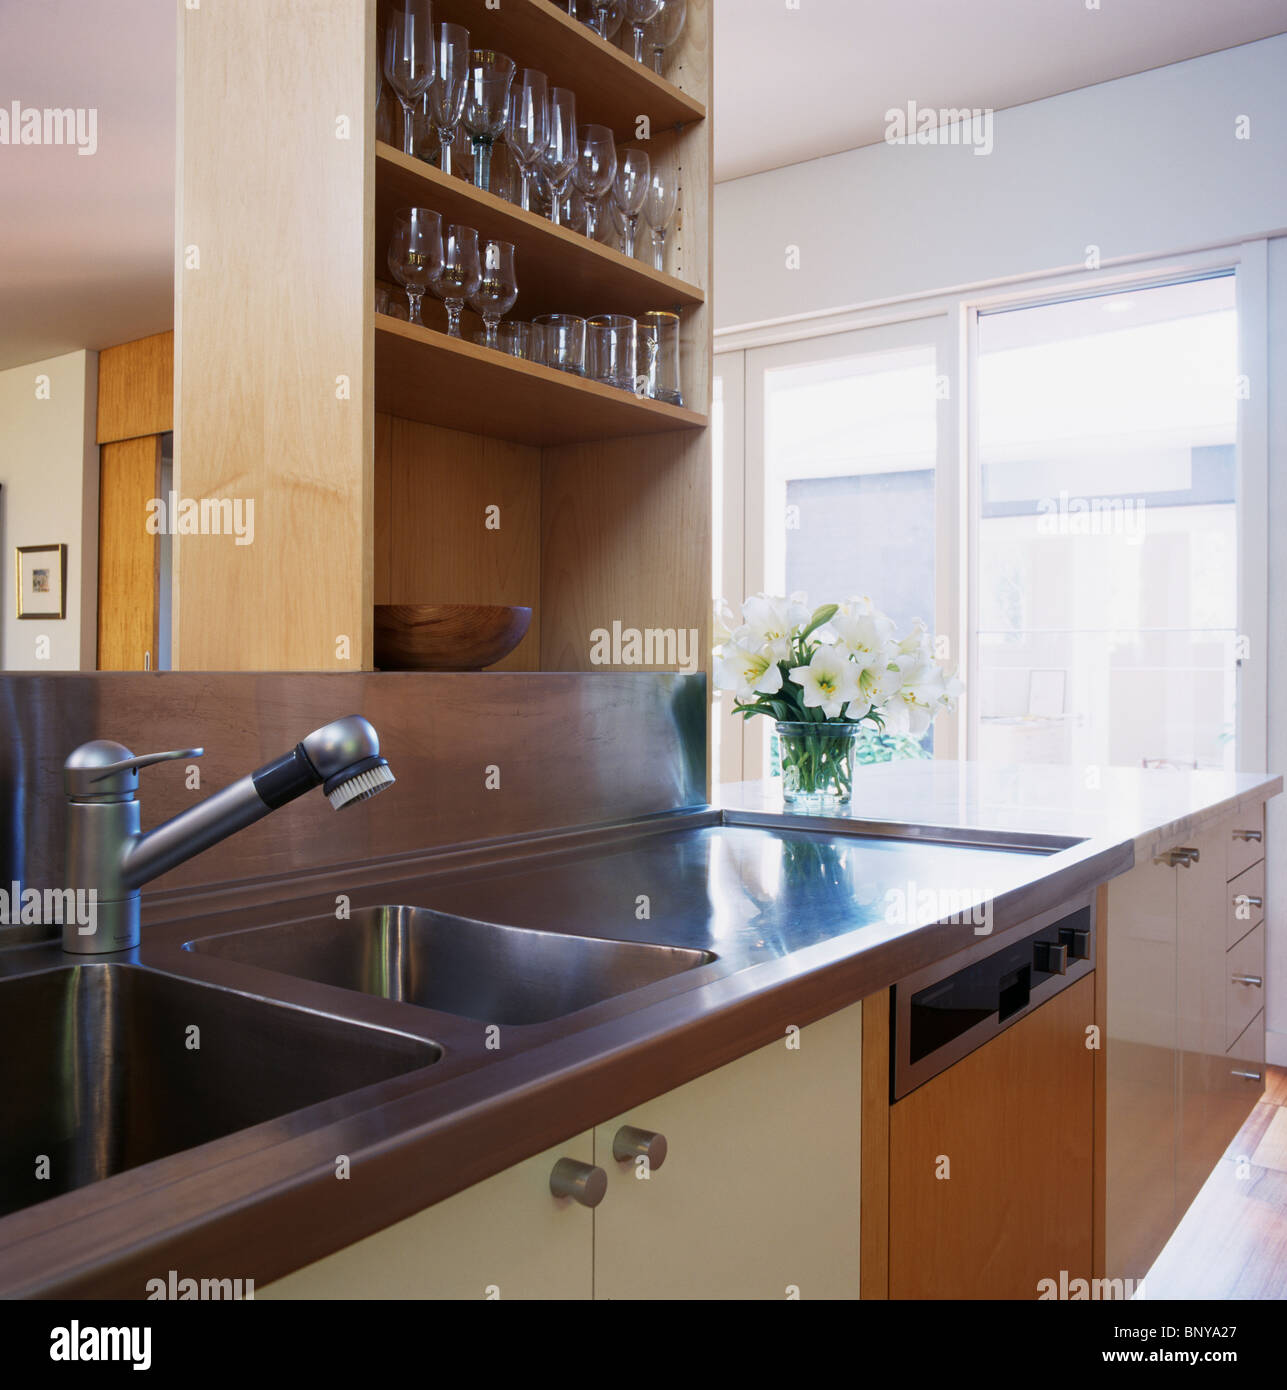 https://c8.alamy.com/comp/BNYA27/wine-glasses-on-shelving-above-stainless-steel-sink-and-worktop-in-BNYA27.jpg